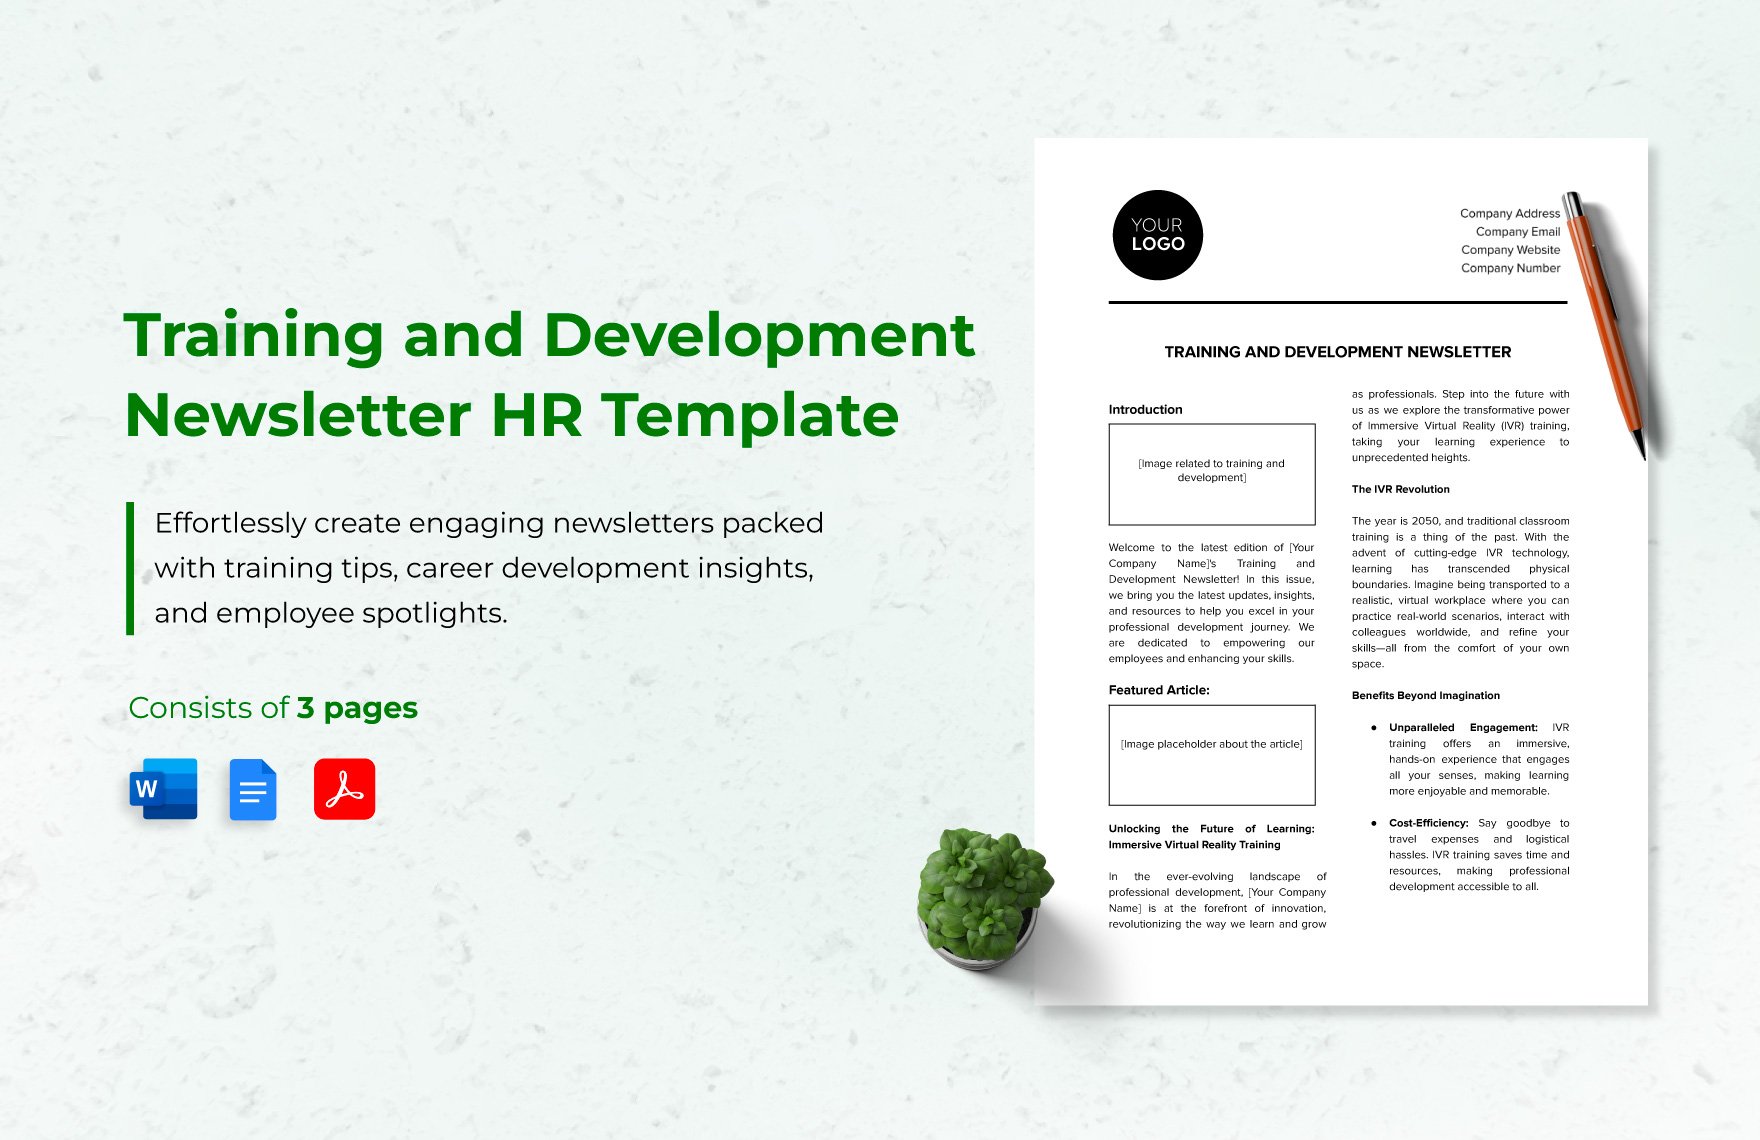 Training and Development Newsletter HR Template